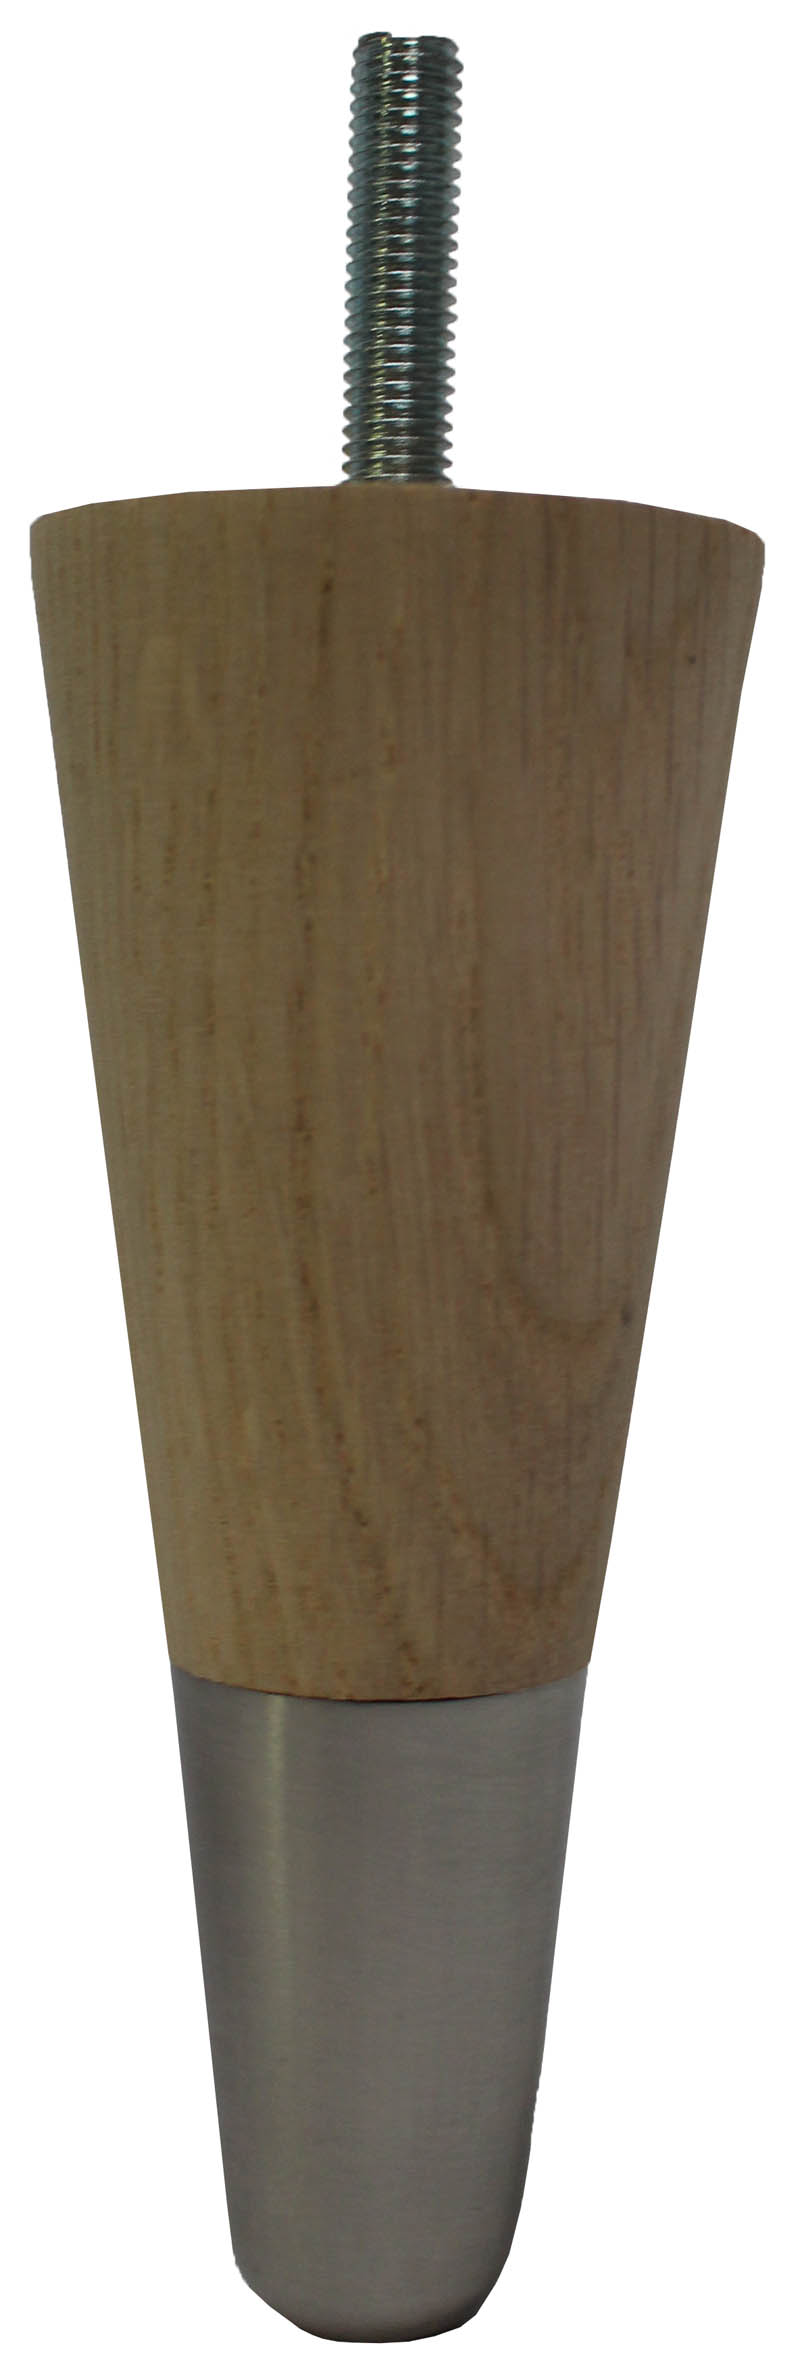 Amaryllis Solid Oak Tapered Furniture Legs - Raw Finish - Brushed Chrome Slipper Cups - Set of 4